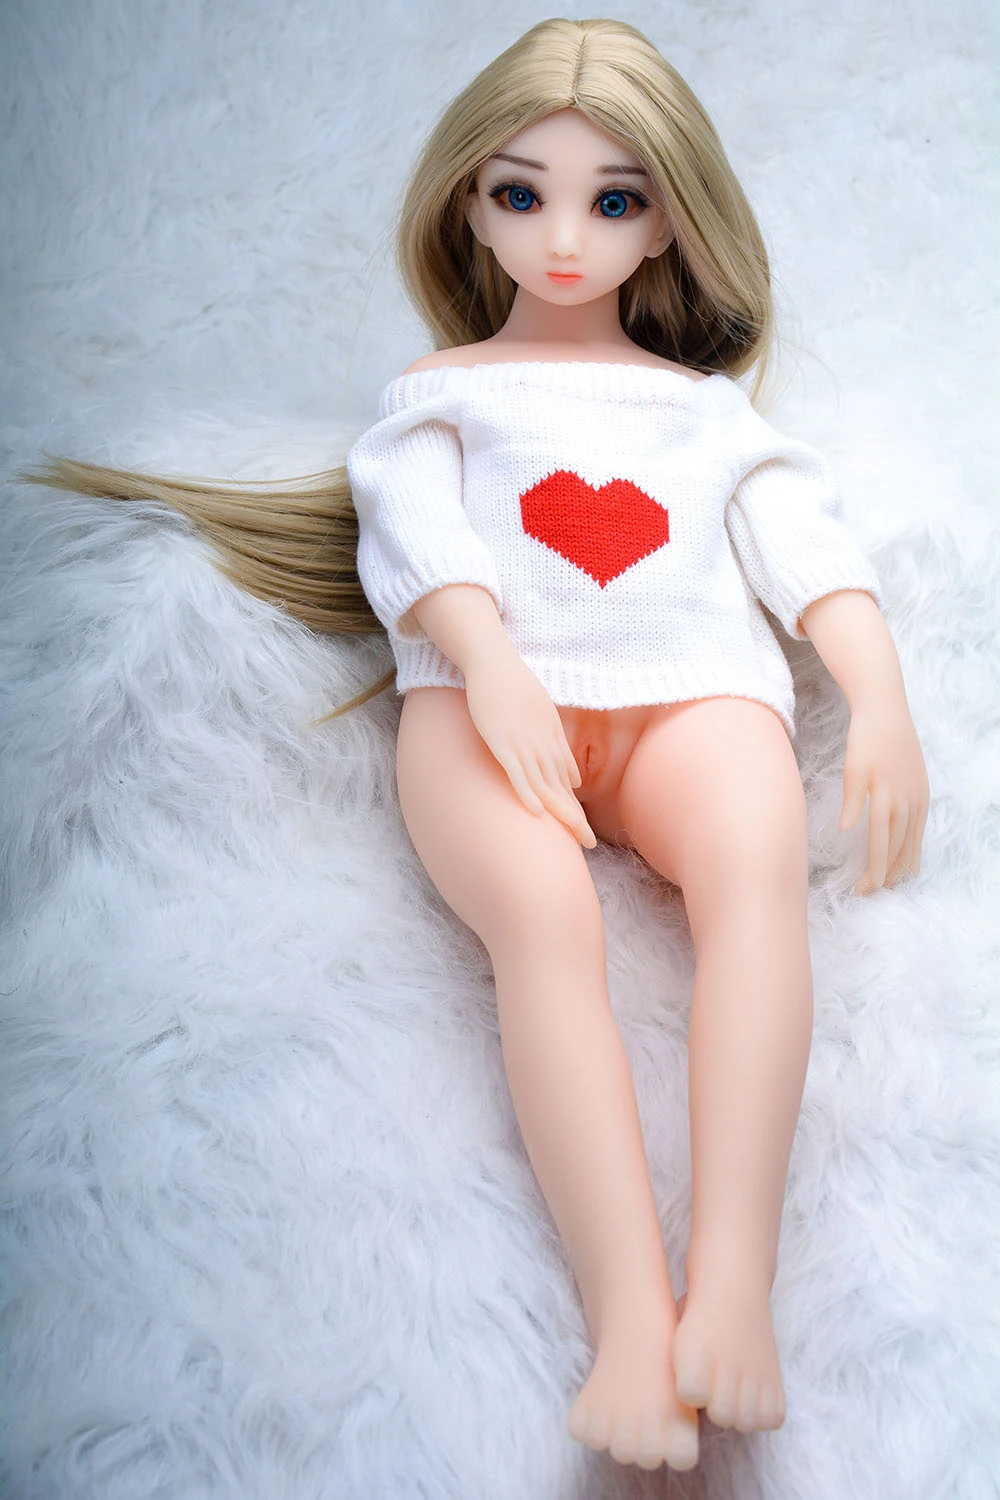 Blonde sex doll